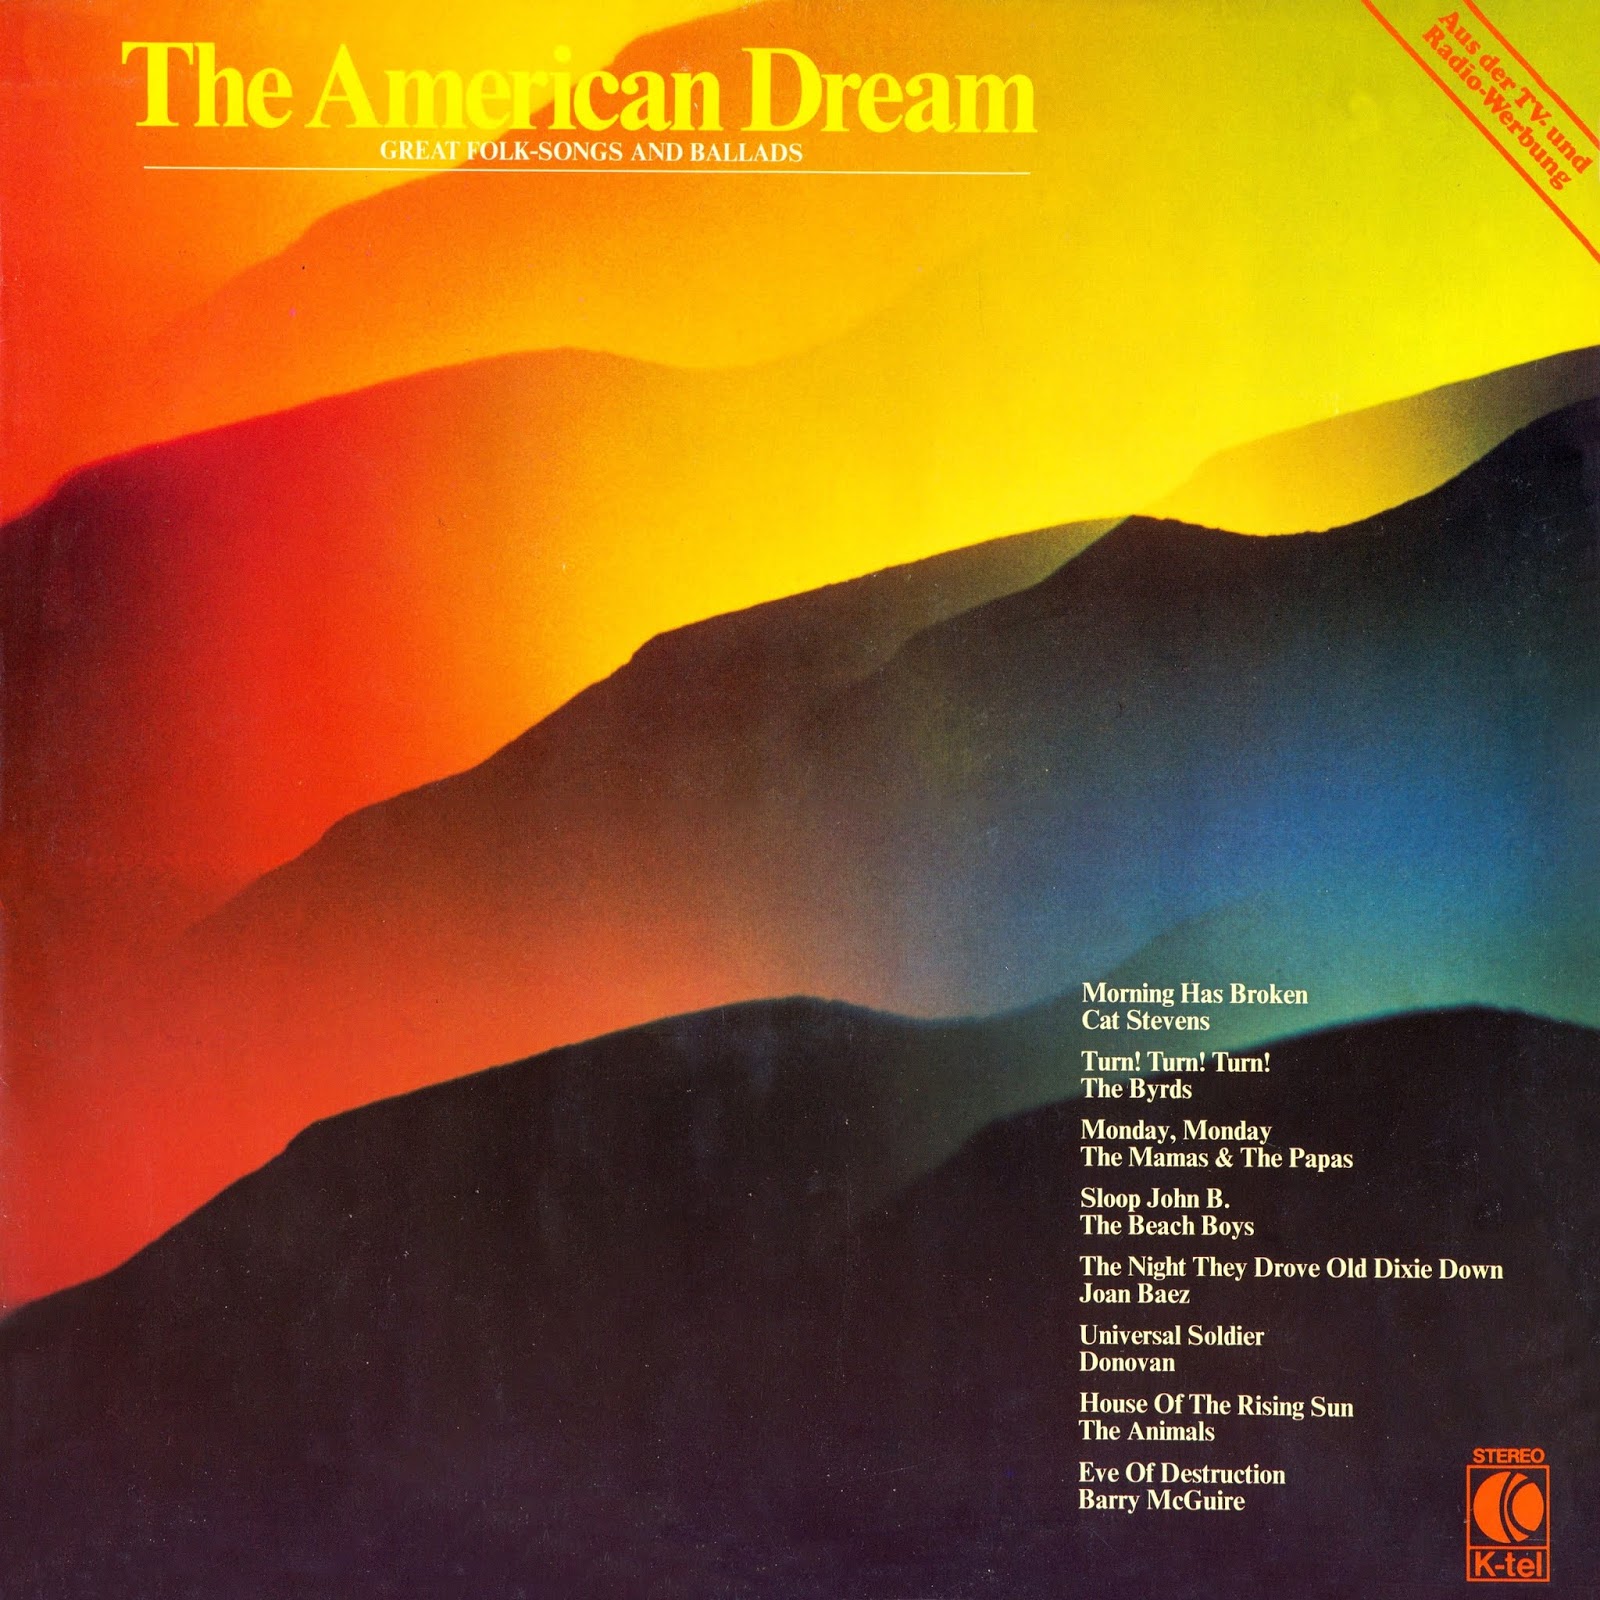 Folk Songs and Ballads. The mamas and the Papas House of the Rising Sun альбом. American Dream песня. Американская мечта песня.